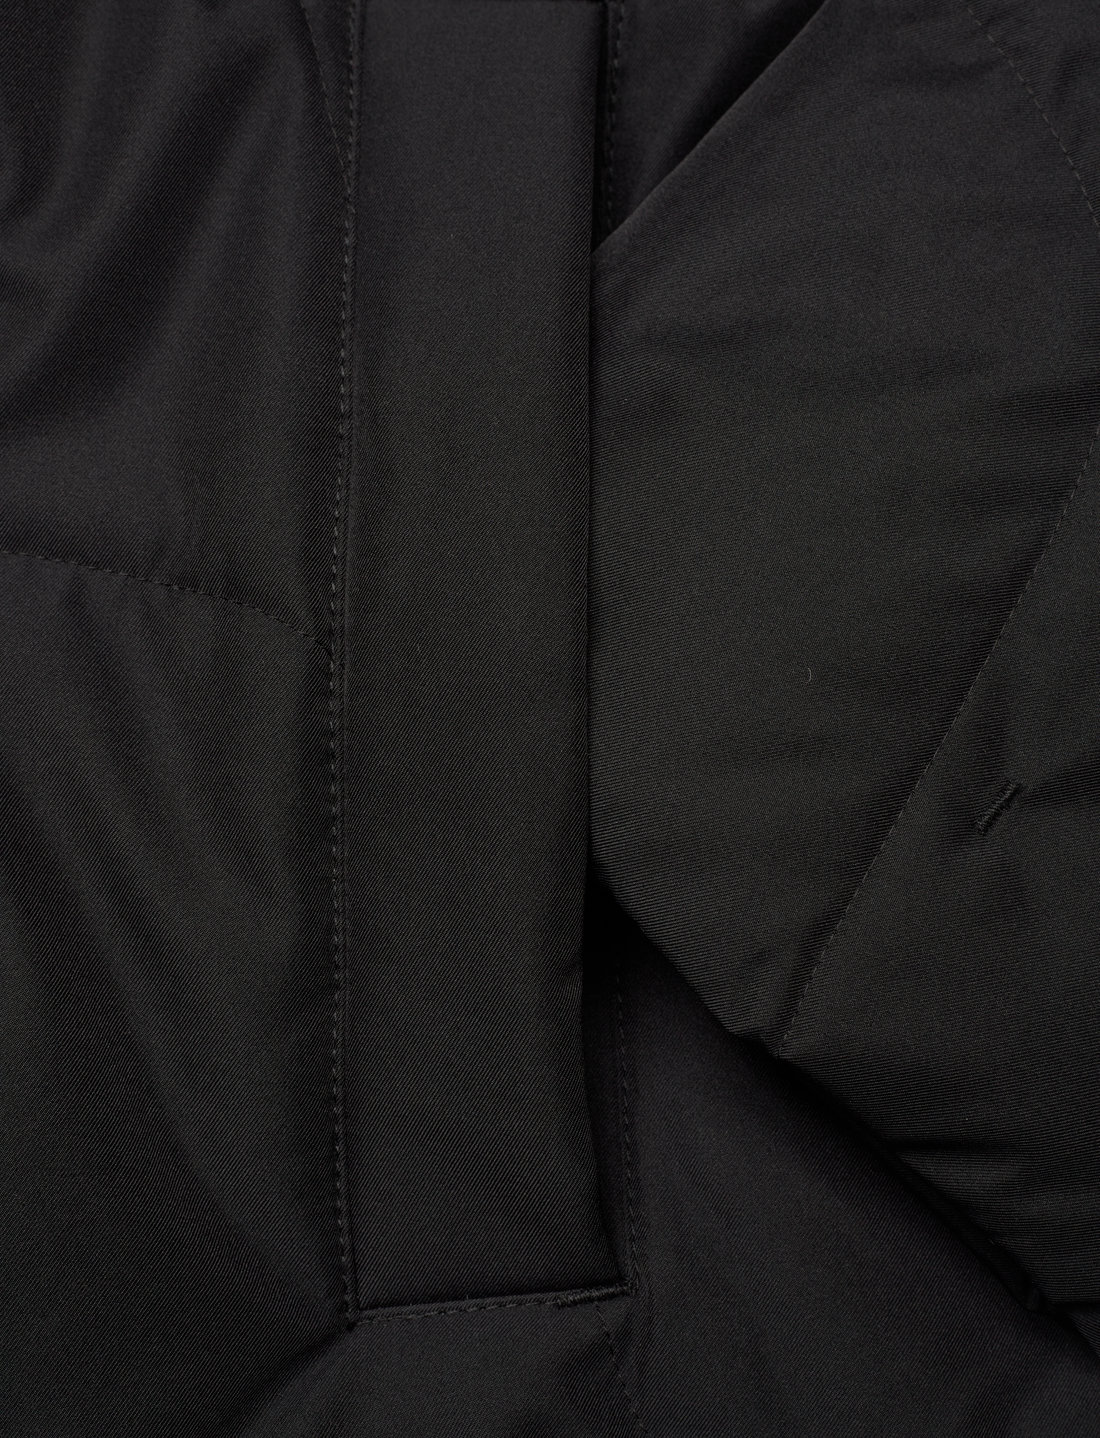 Marimekko Tekstuuri Taifuuni - 360 €. Buy Down- & padded jackets from  Marimekko online at Boozt.com. Fast delivery and easy returns